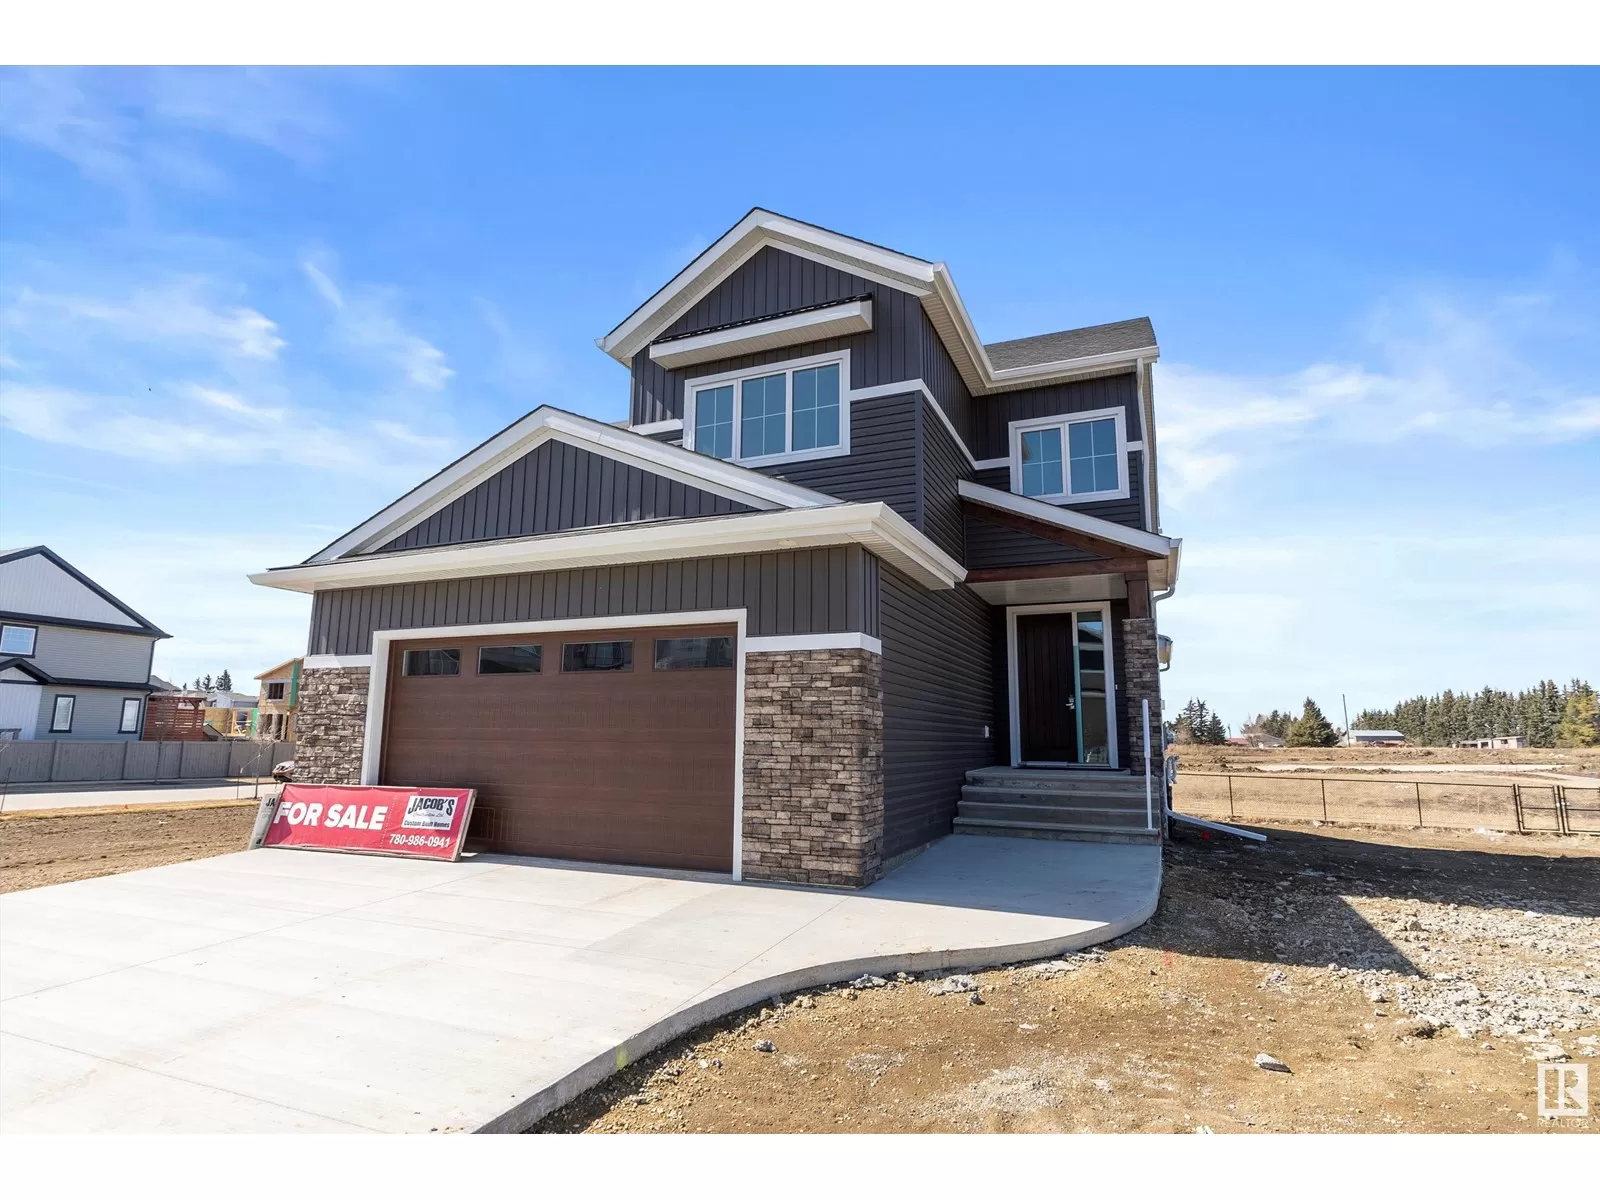 House for rent: 102 Lilac Cl, Leduc, Alberta T9E 1R3